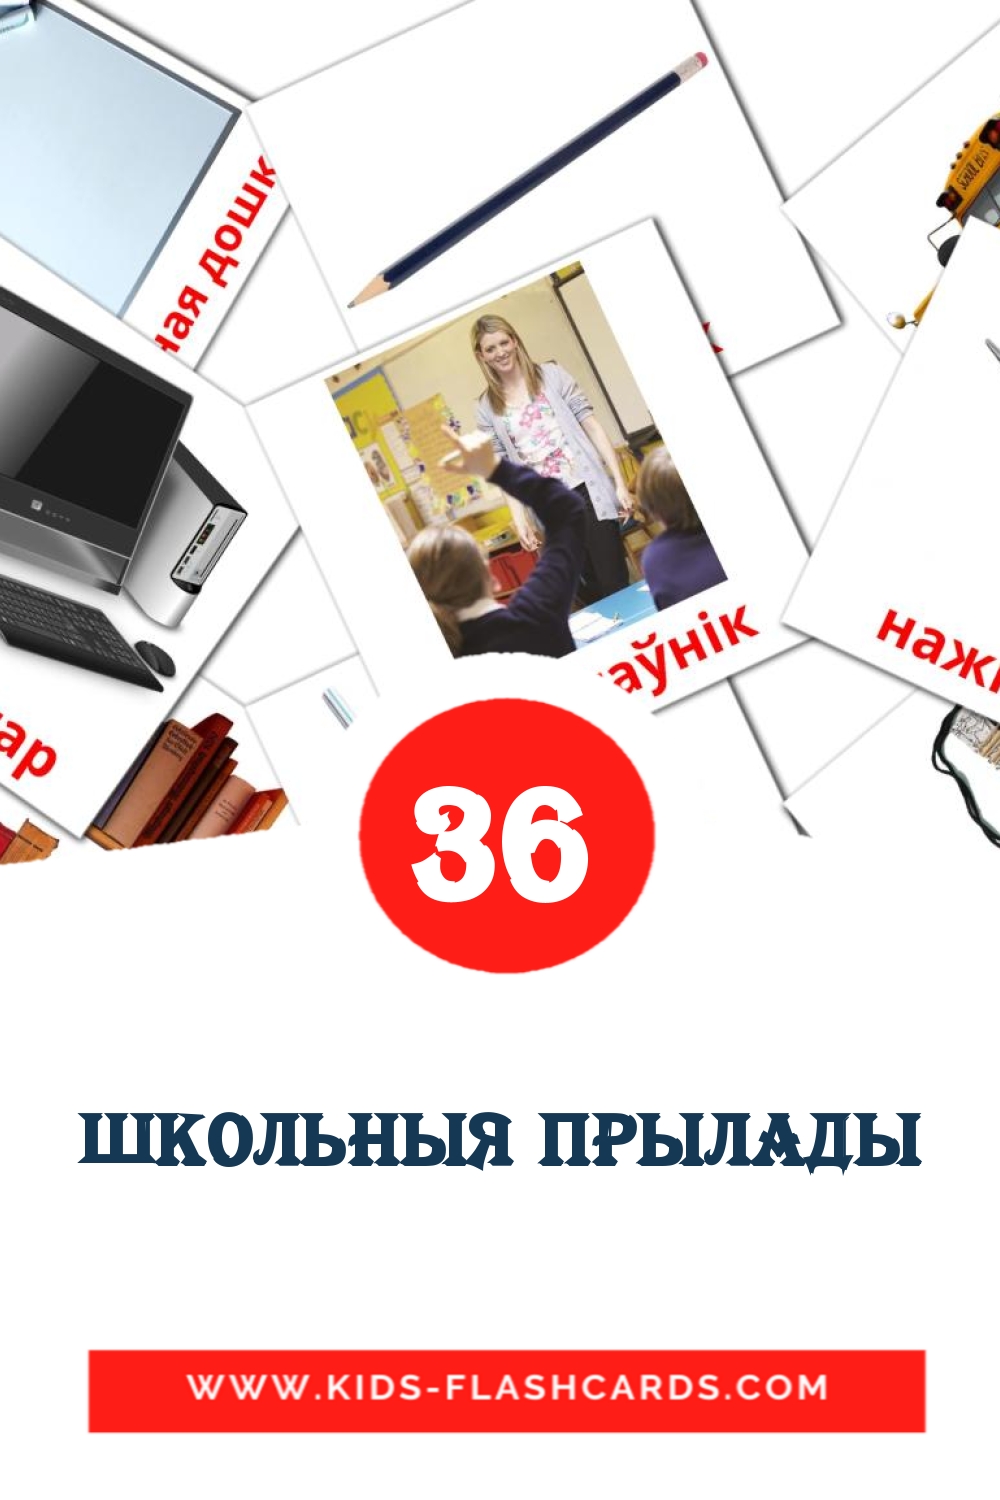 36 Cartões com Imagens de школьныя прылады para Jardim de Infância em bielorrusso